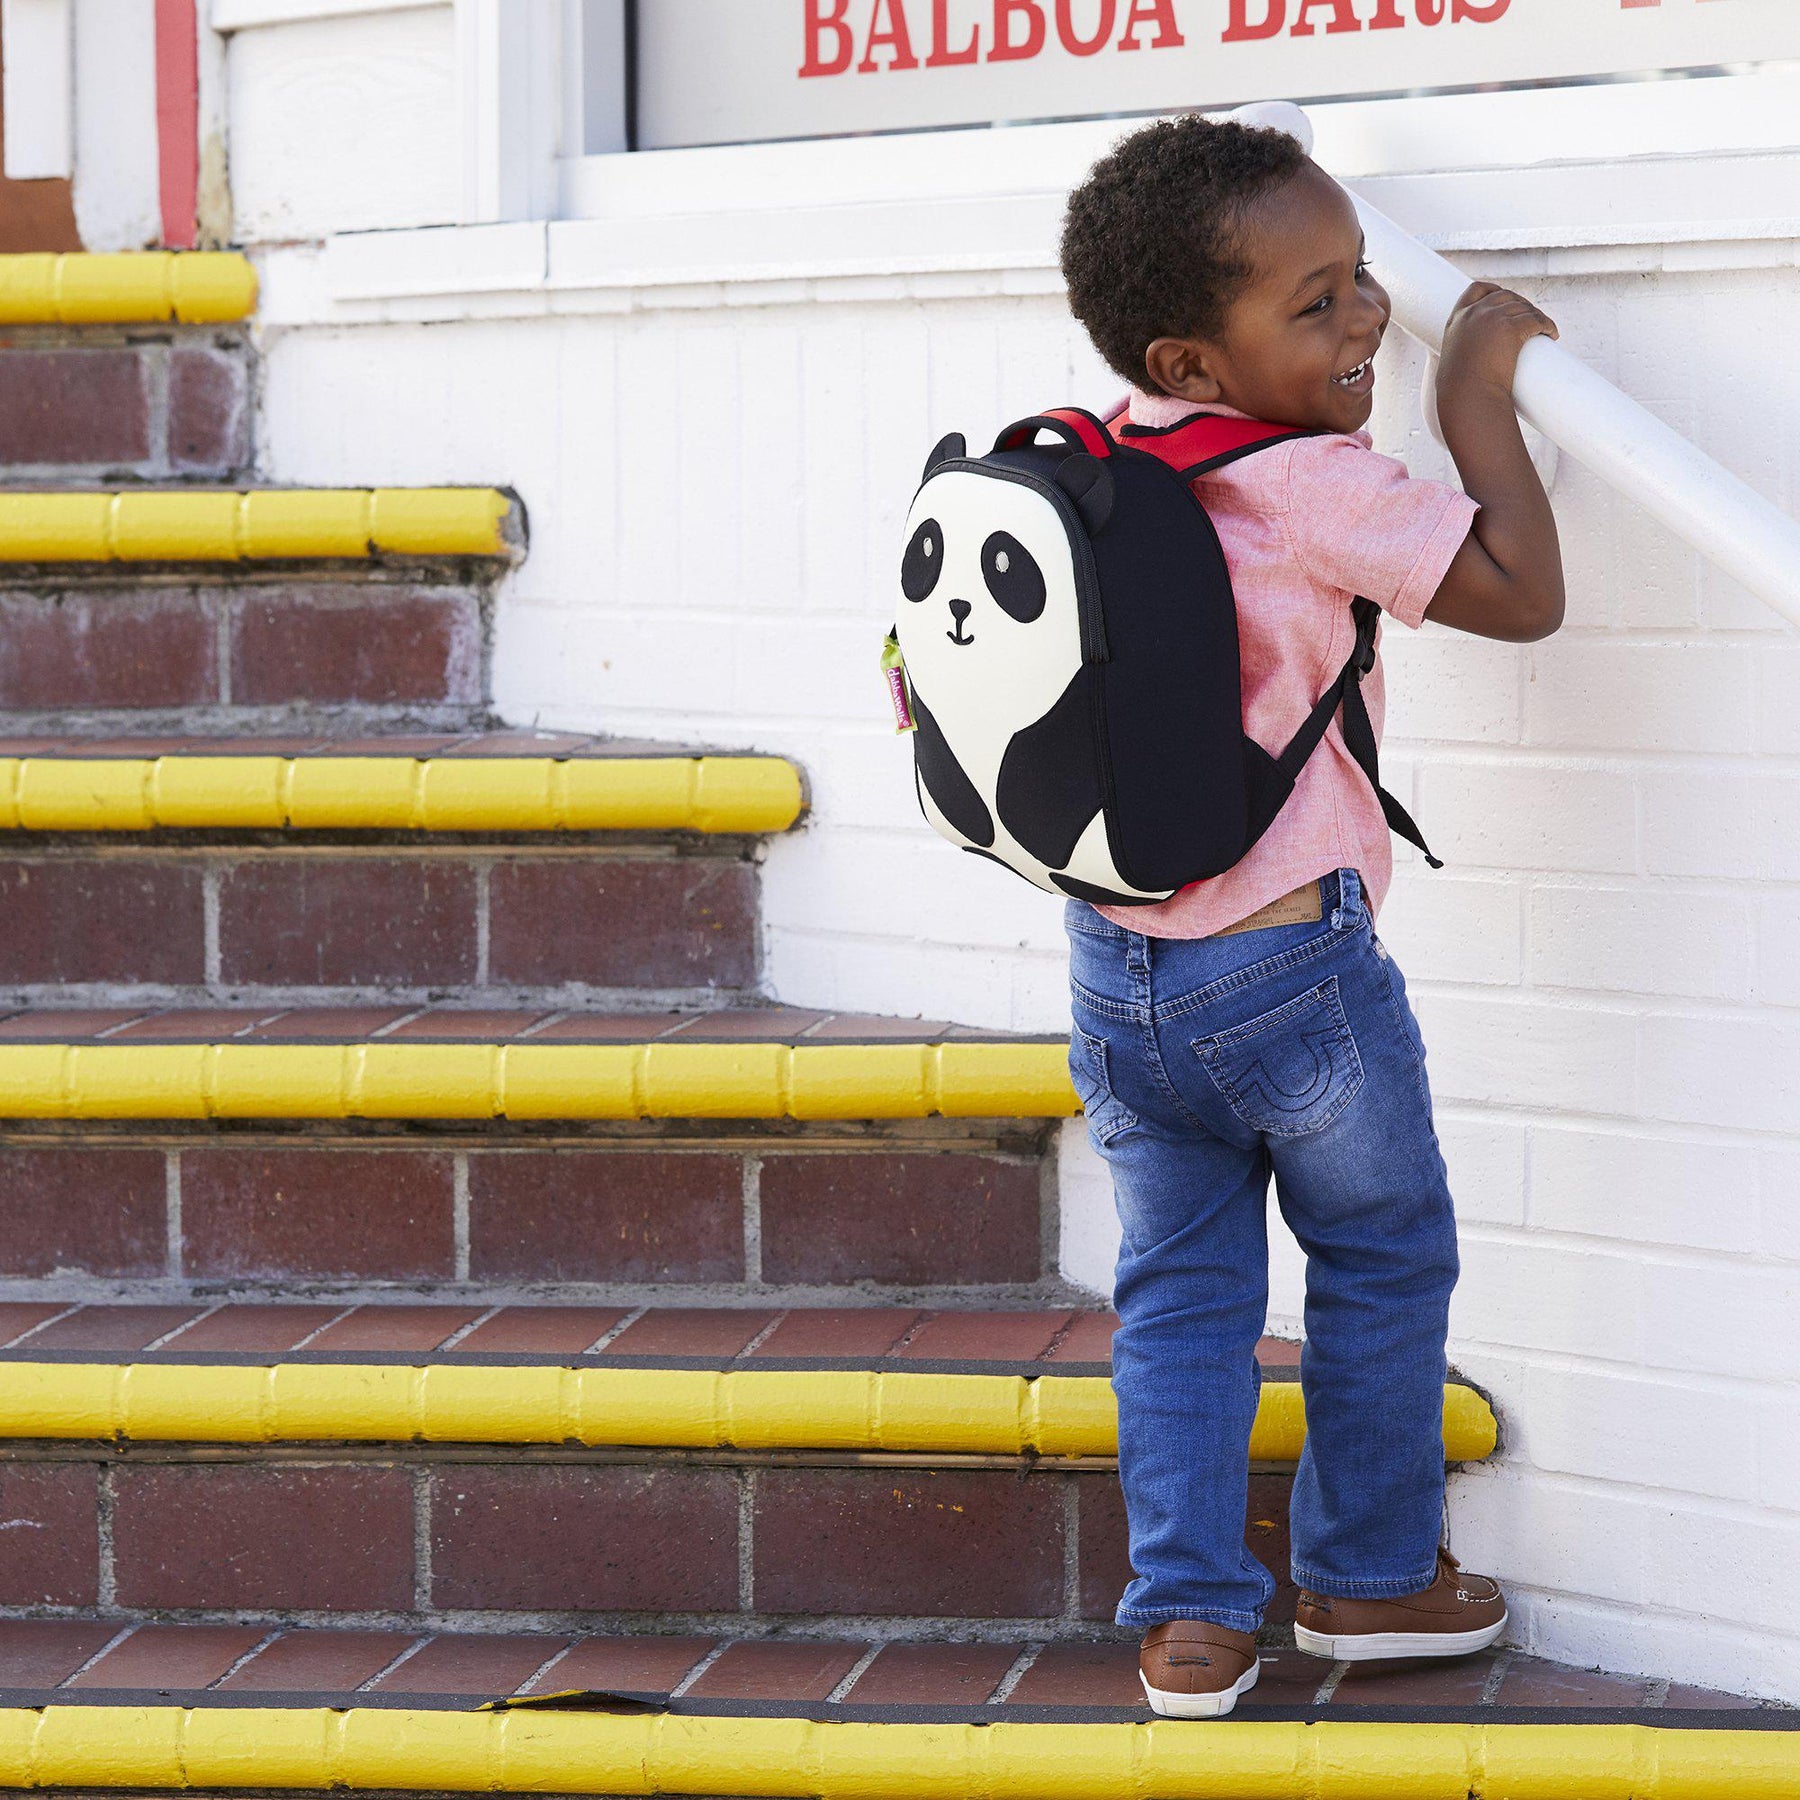 Kids Toddler Backpack Boys Girl with Leash Harness Kindergarten